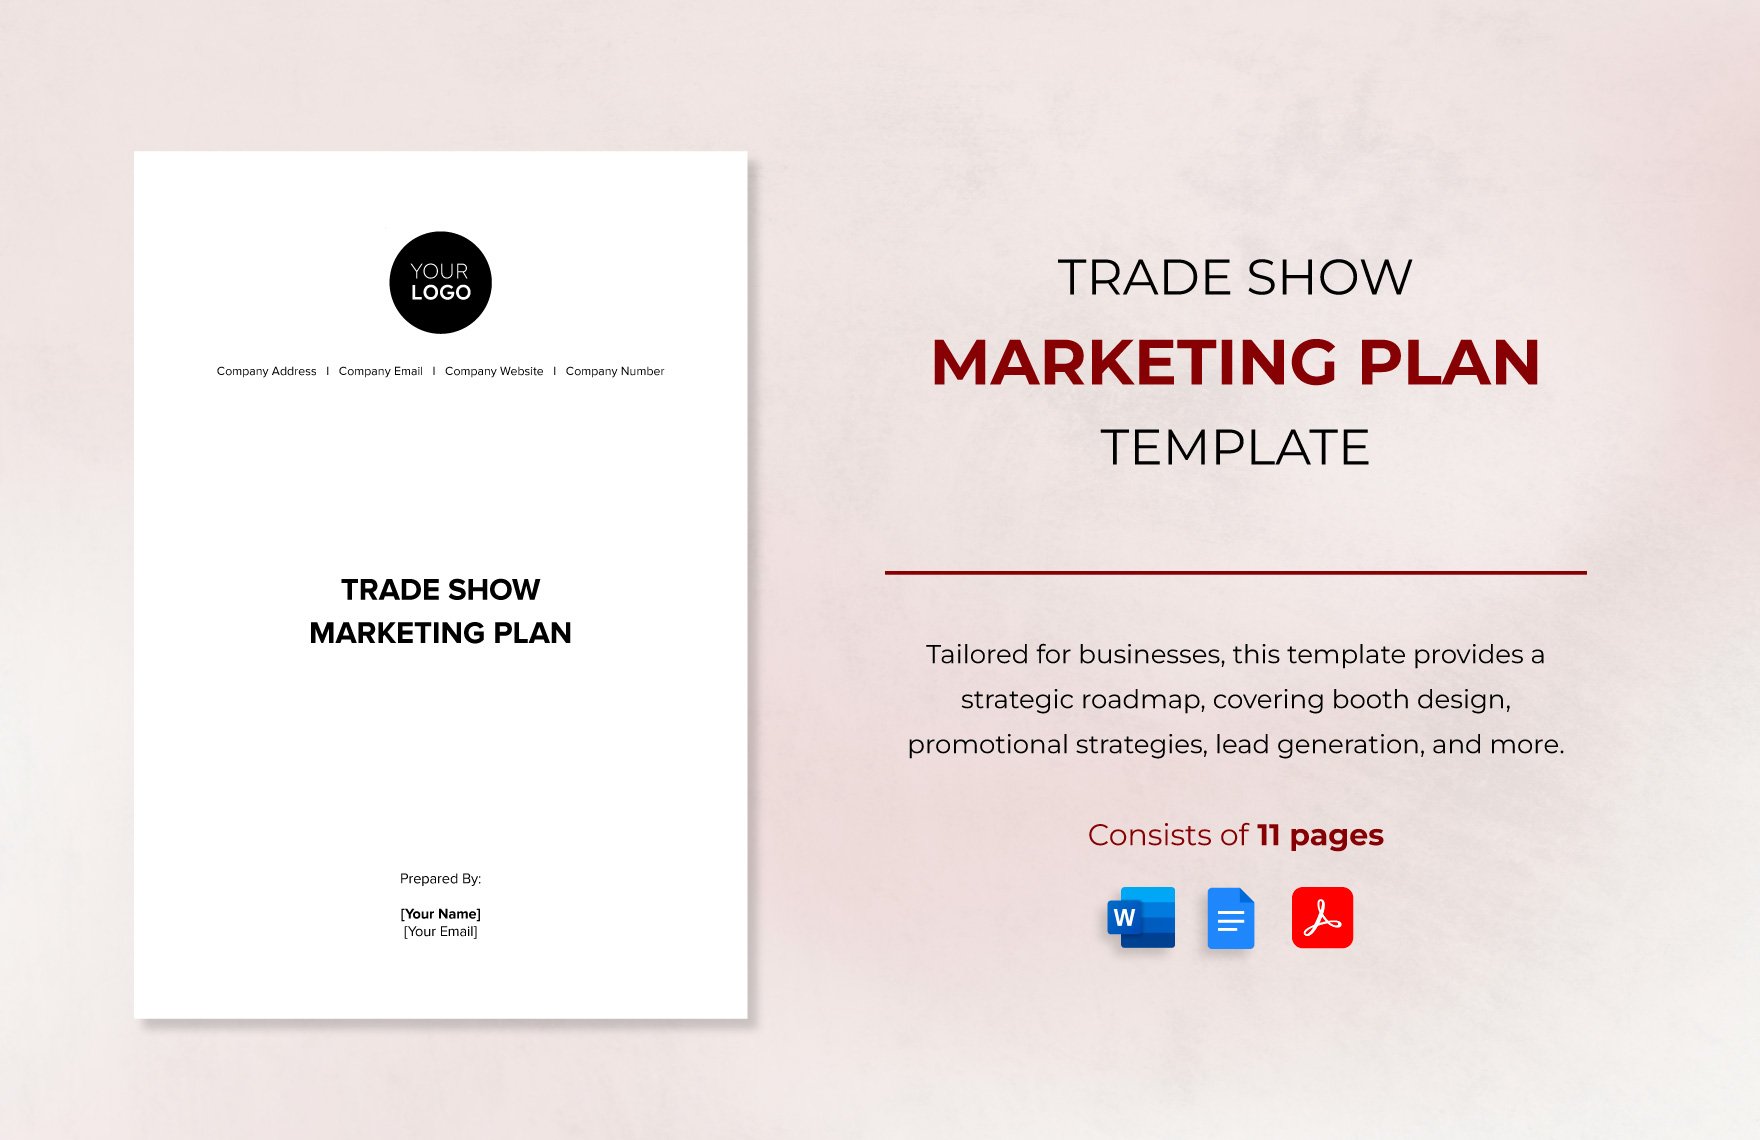 Trade Show Marketing Plan Template in Word, Google Docs, PDF